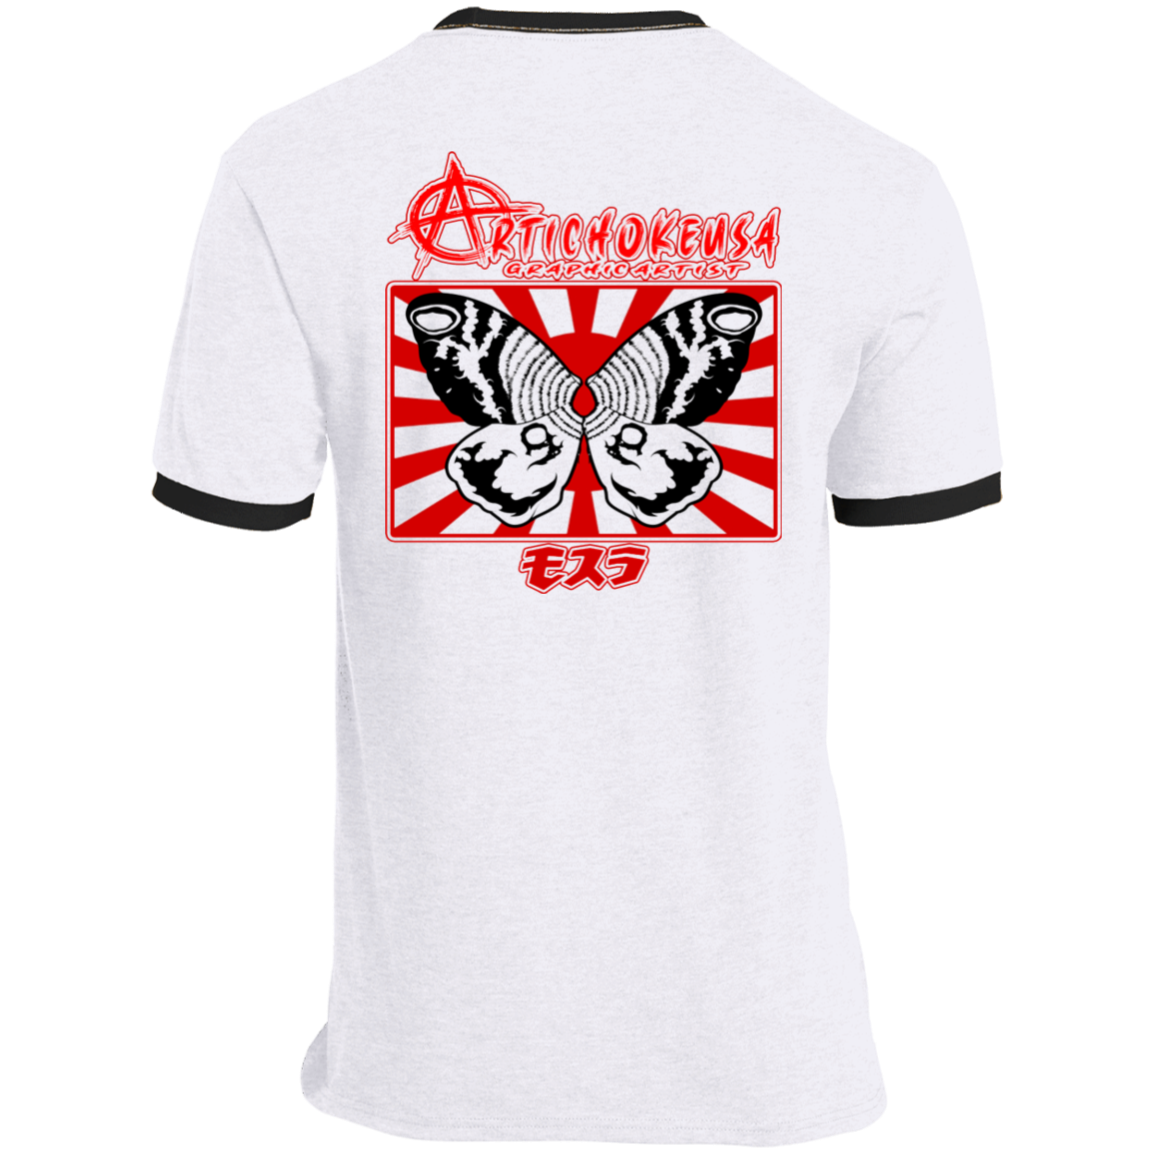 ArtichokeUSA Character and Font design. Shobijin (Twins)/Mothra Fan Art . Let's Create Your Own Design Today. Ringer Tee